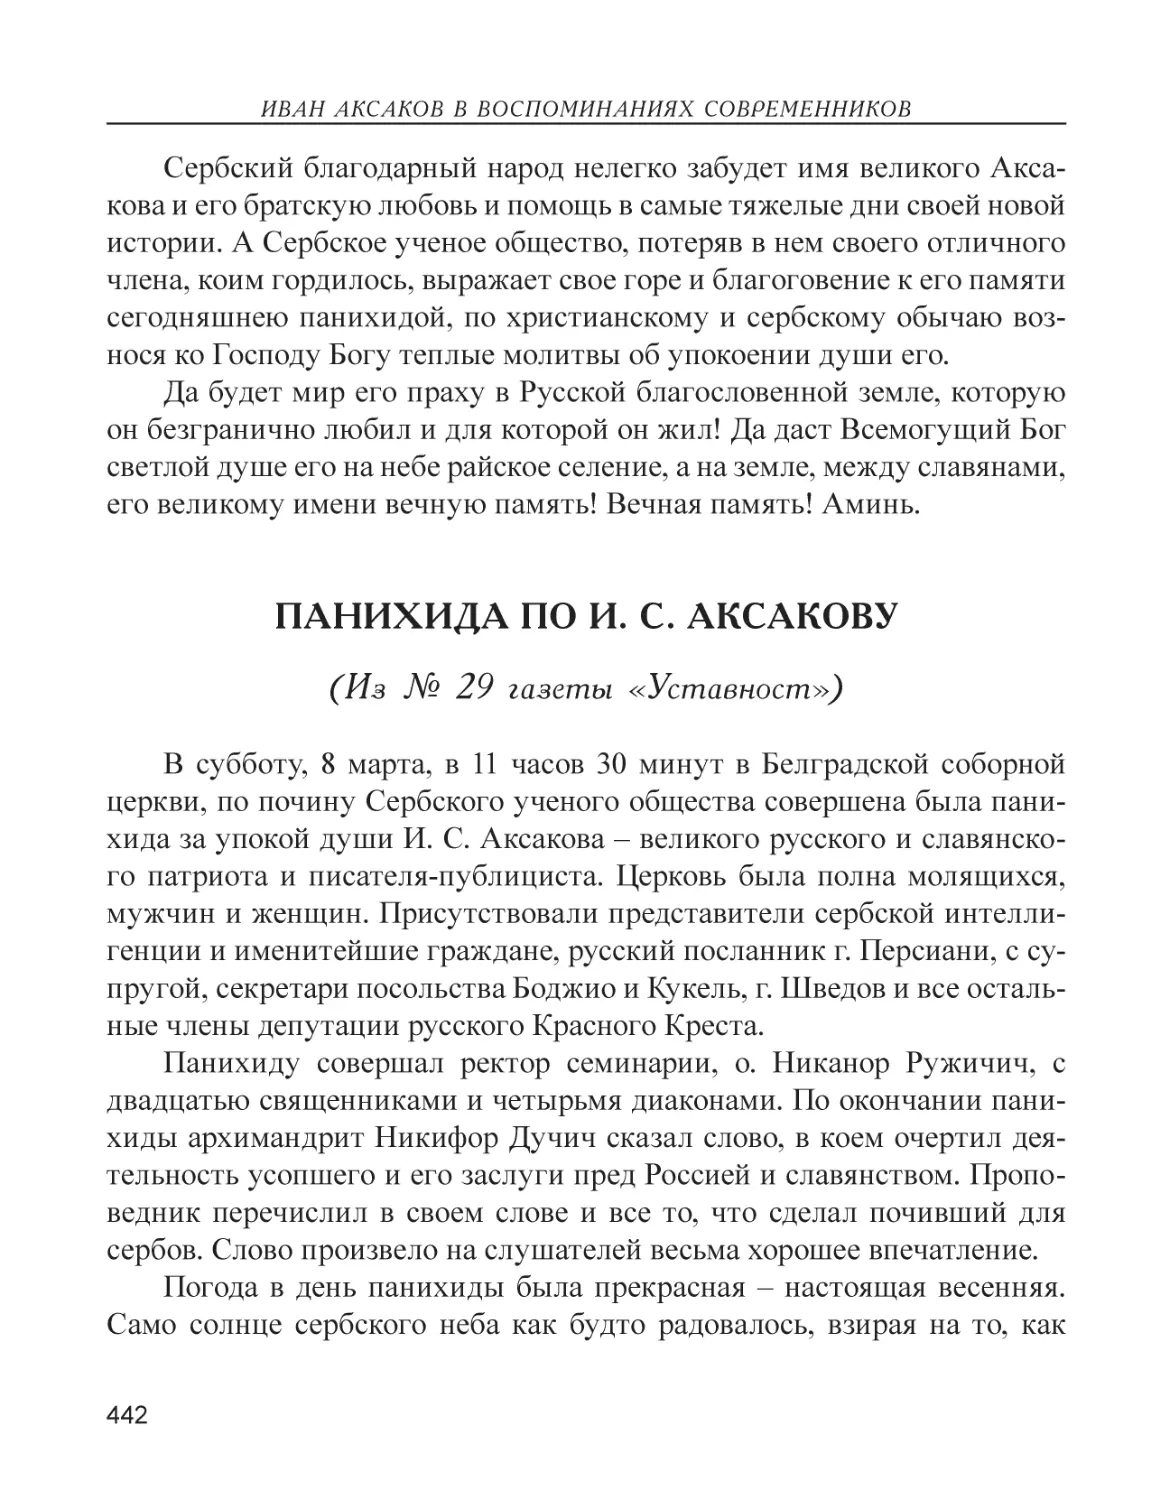 Панихида по И. С. Аксакову (Из № 29 газеты «Уставност»)